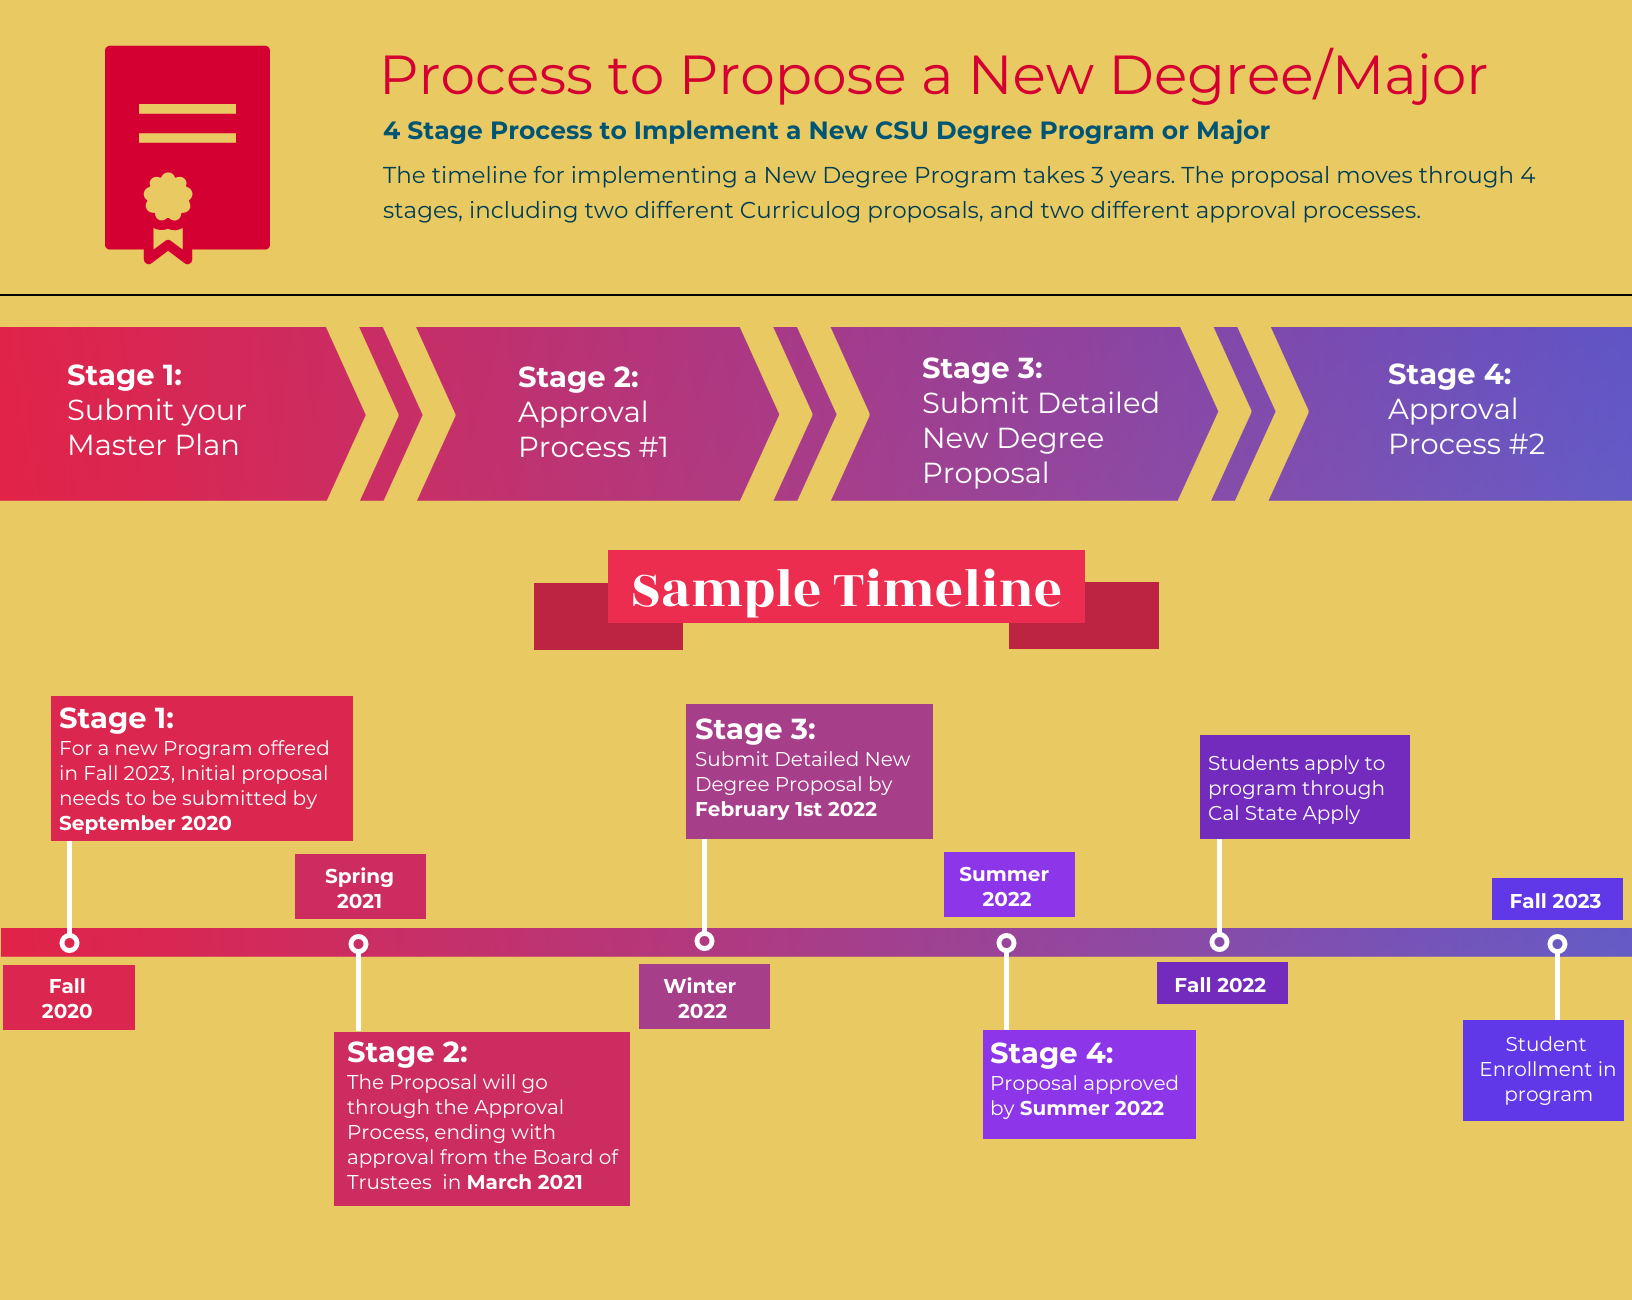 Request for New CSU Degree Program/Major (Bachelor's or